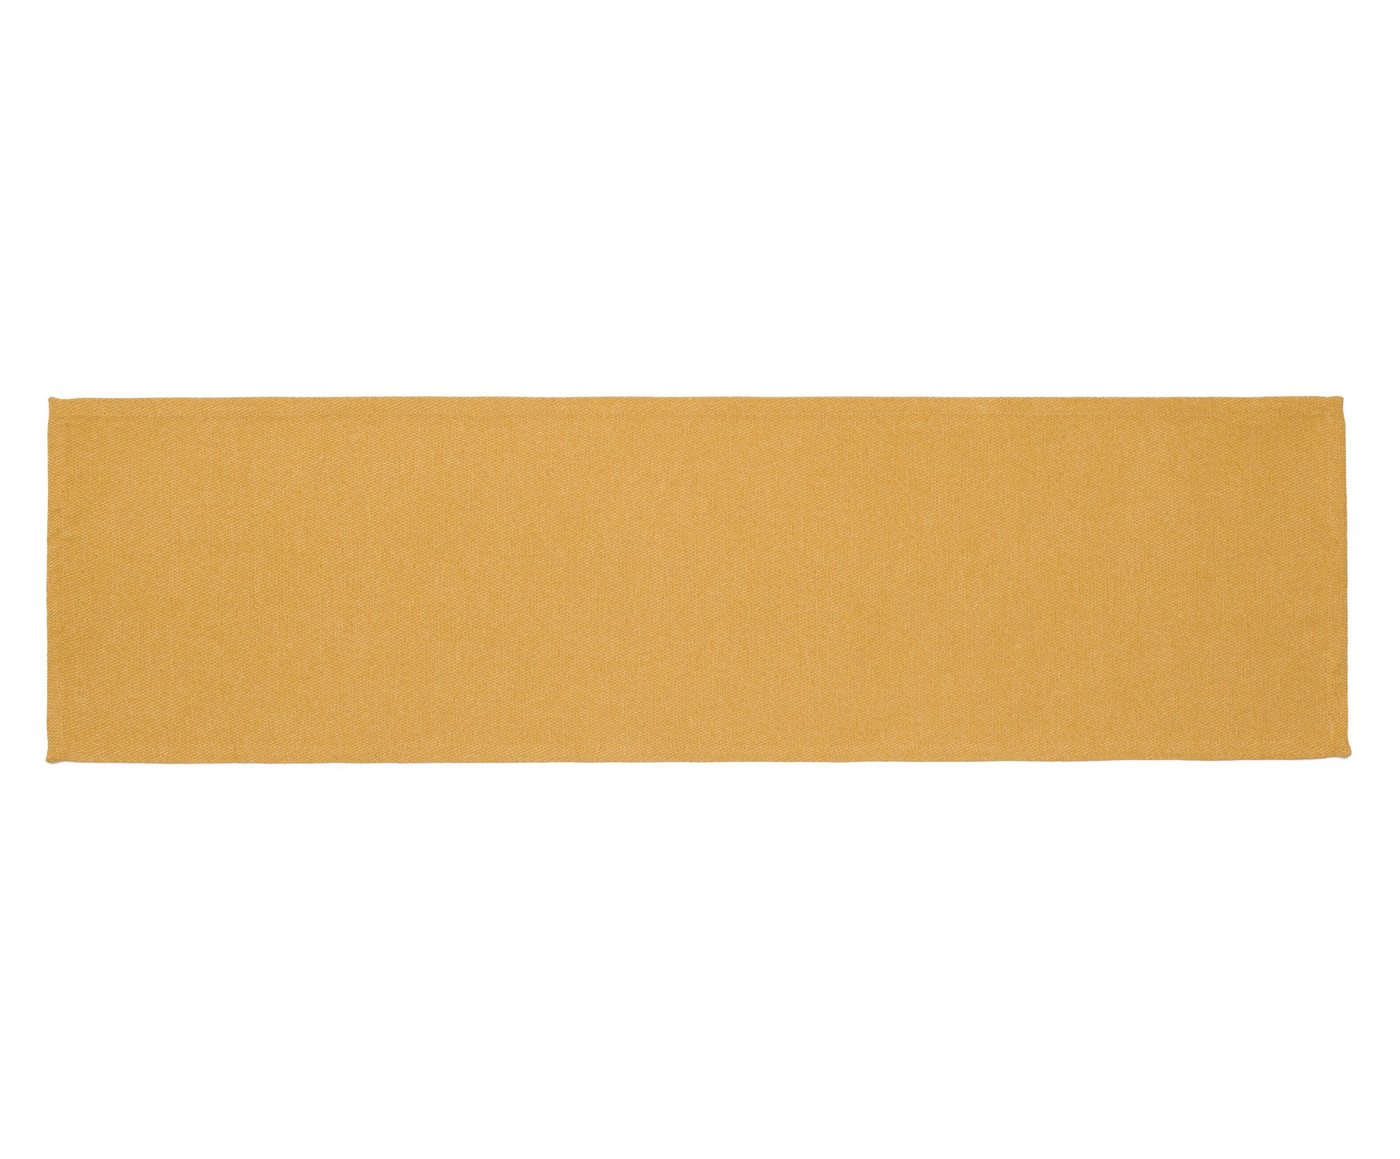 Gözze Tischläufer GÖZZE Tischläufer FABRICIO gelb (LB 140x40 cm) LB 140x40 cm gelb von Gözze